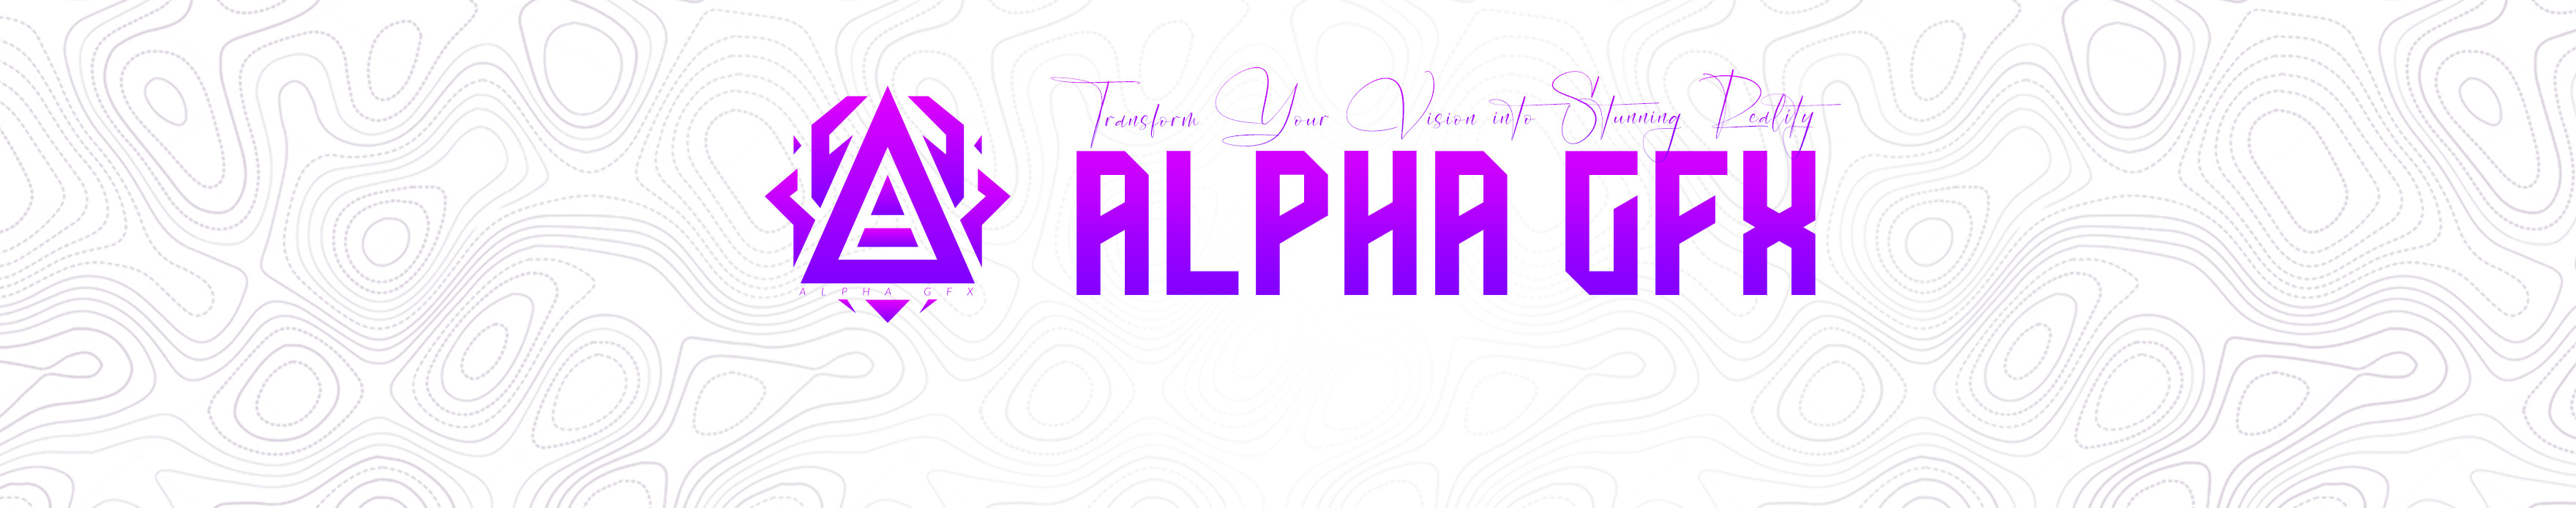 Alpha Gfx's profile banner